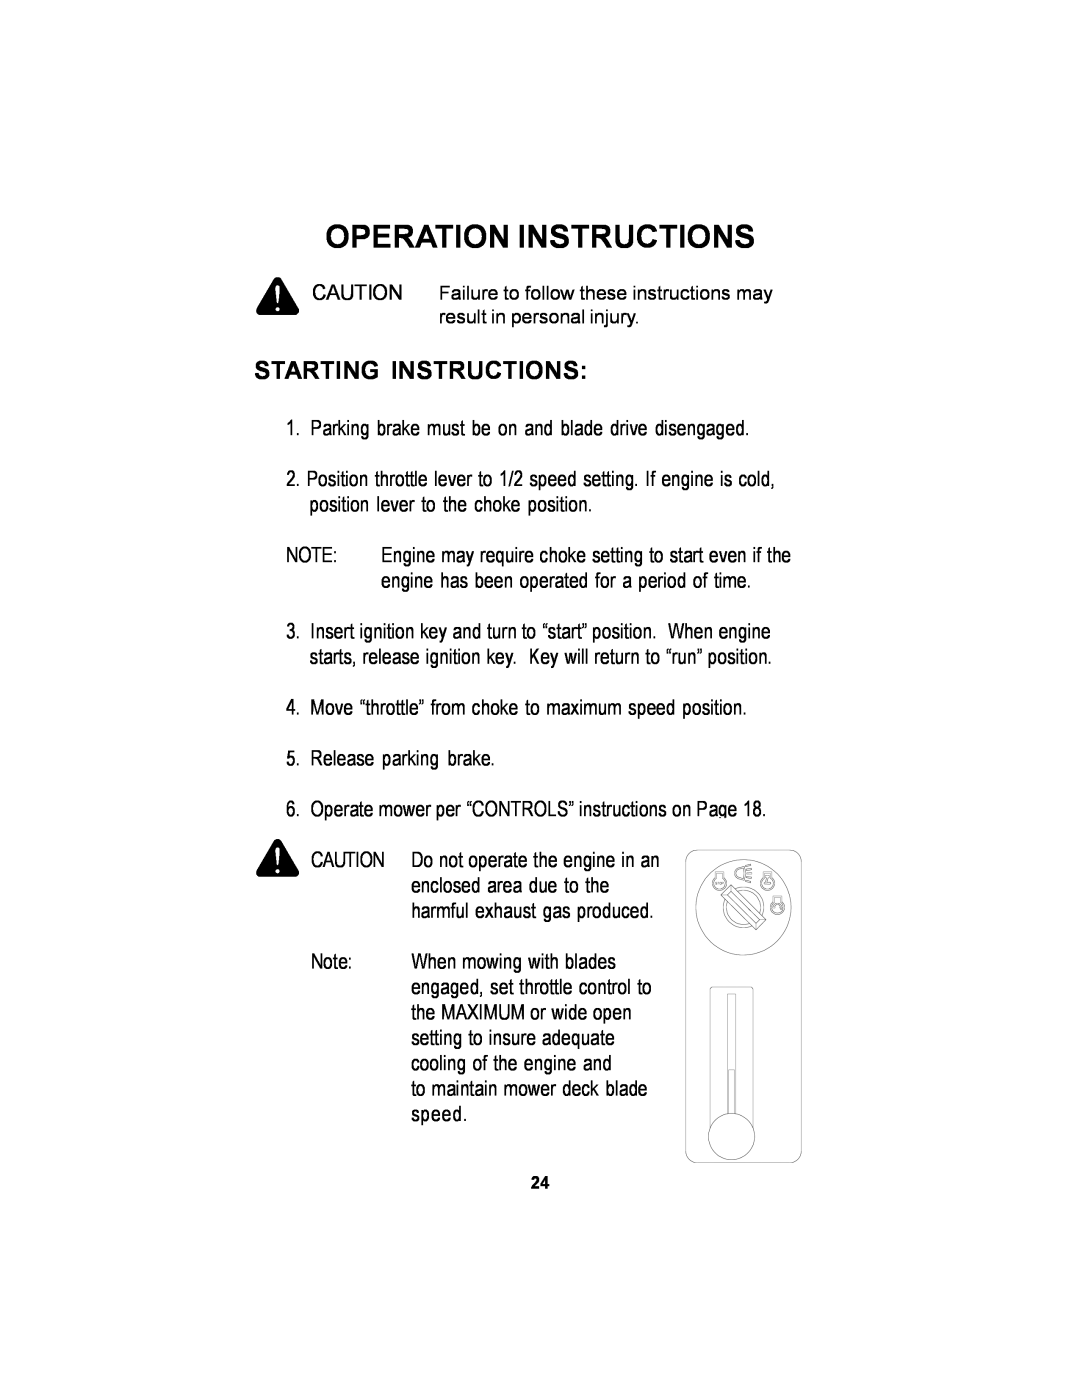 Dixon 14295-1005 manual Starting Instructions, Operation Instructions 